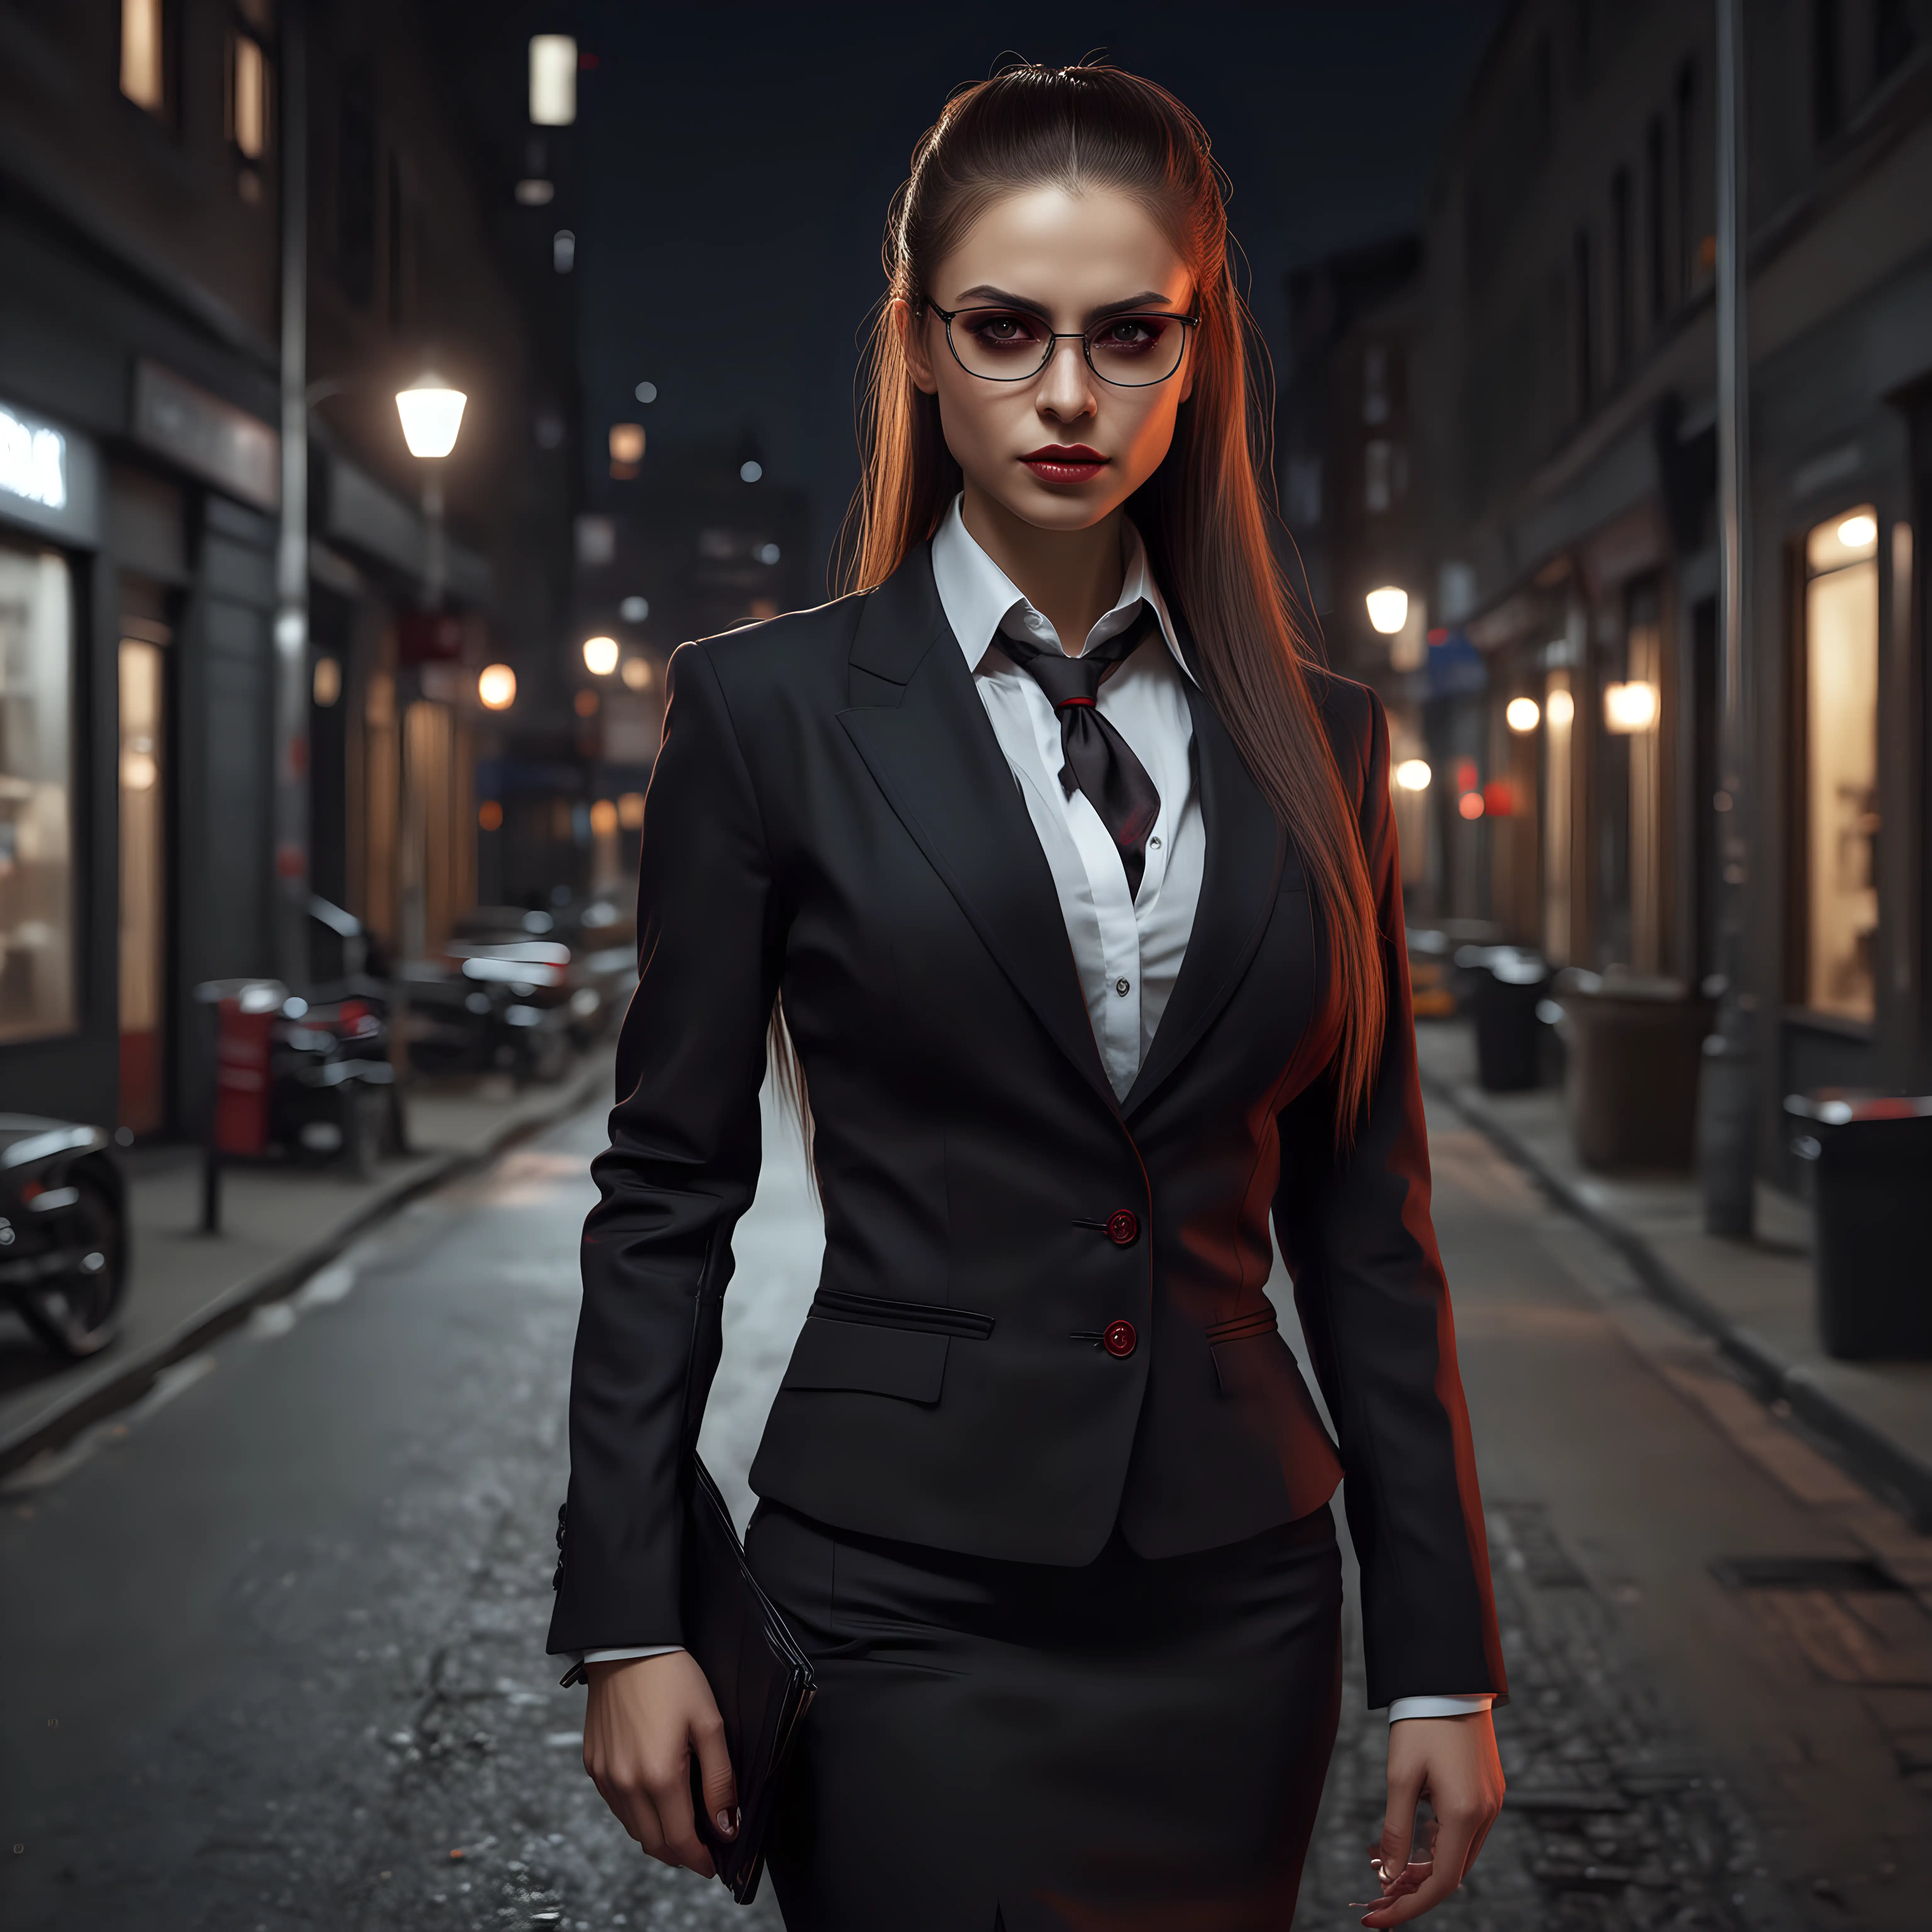 Malkavian Vampire Businesswoman in Night Street Scene